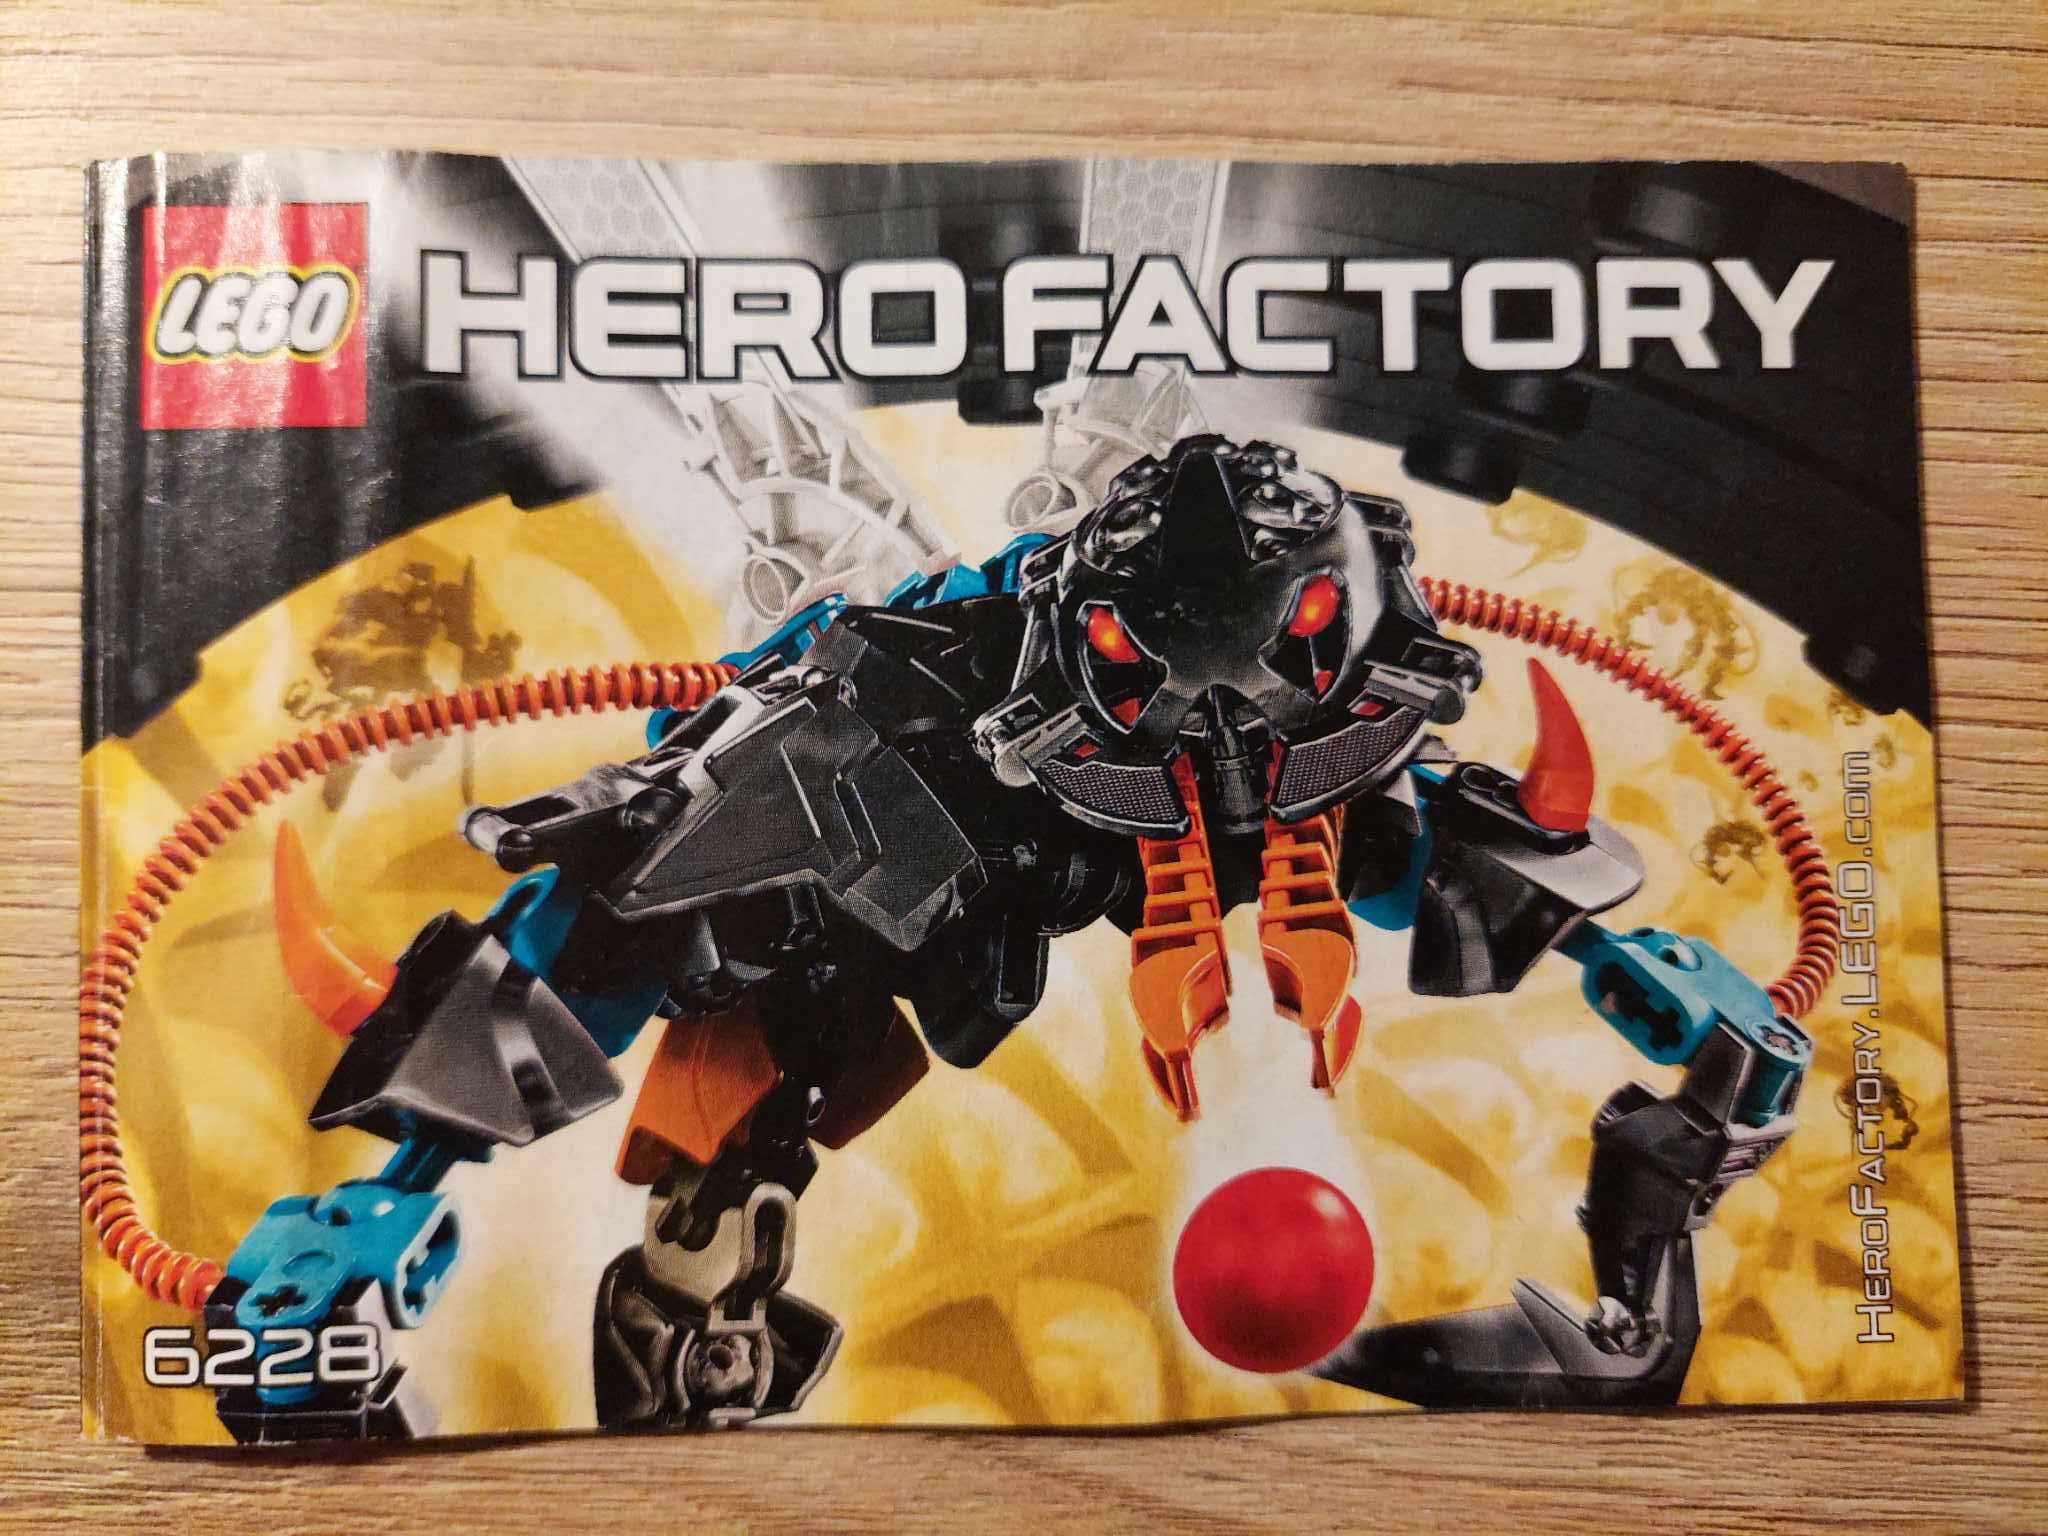 Lego Hero Factory 6228 - THORNRAXX